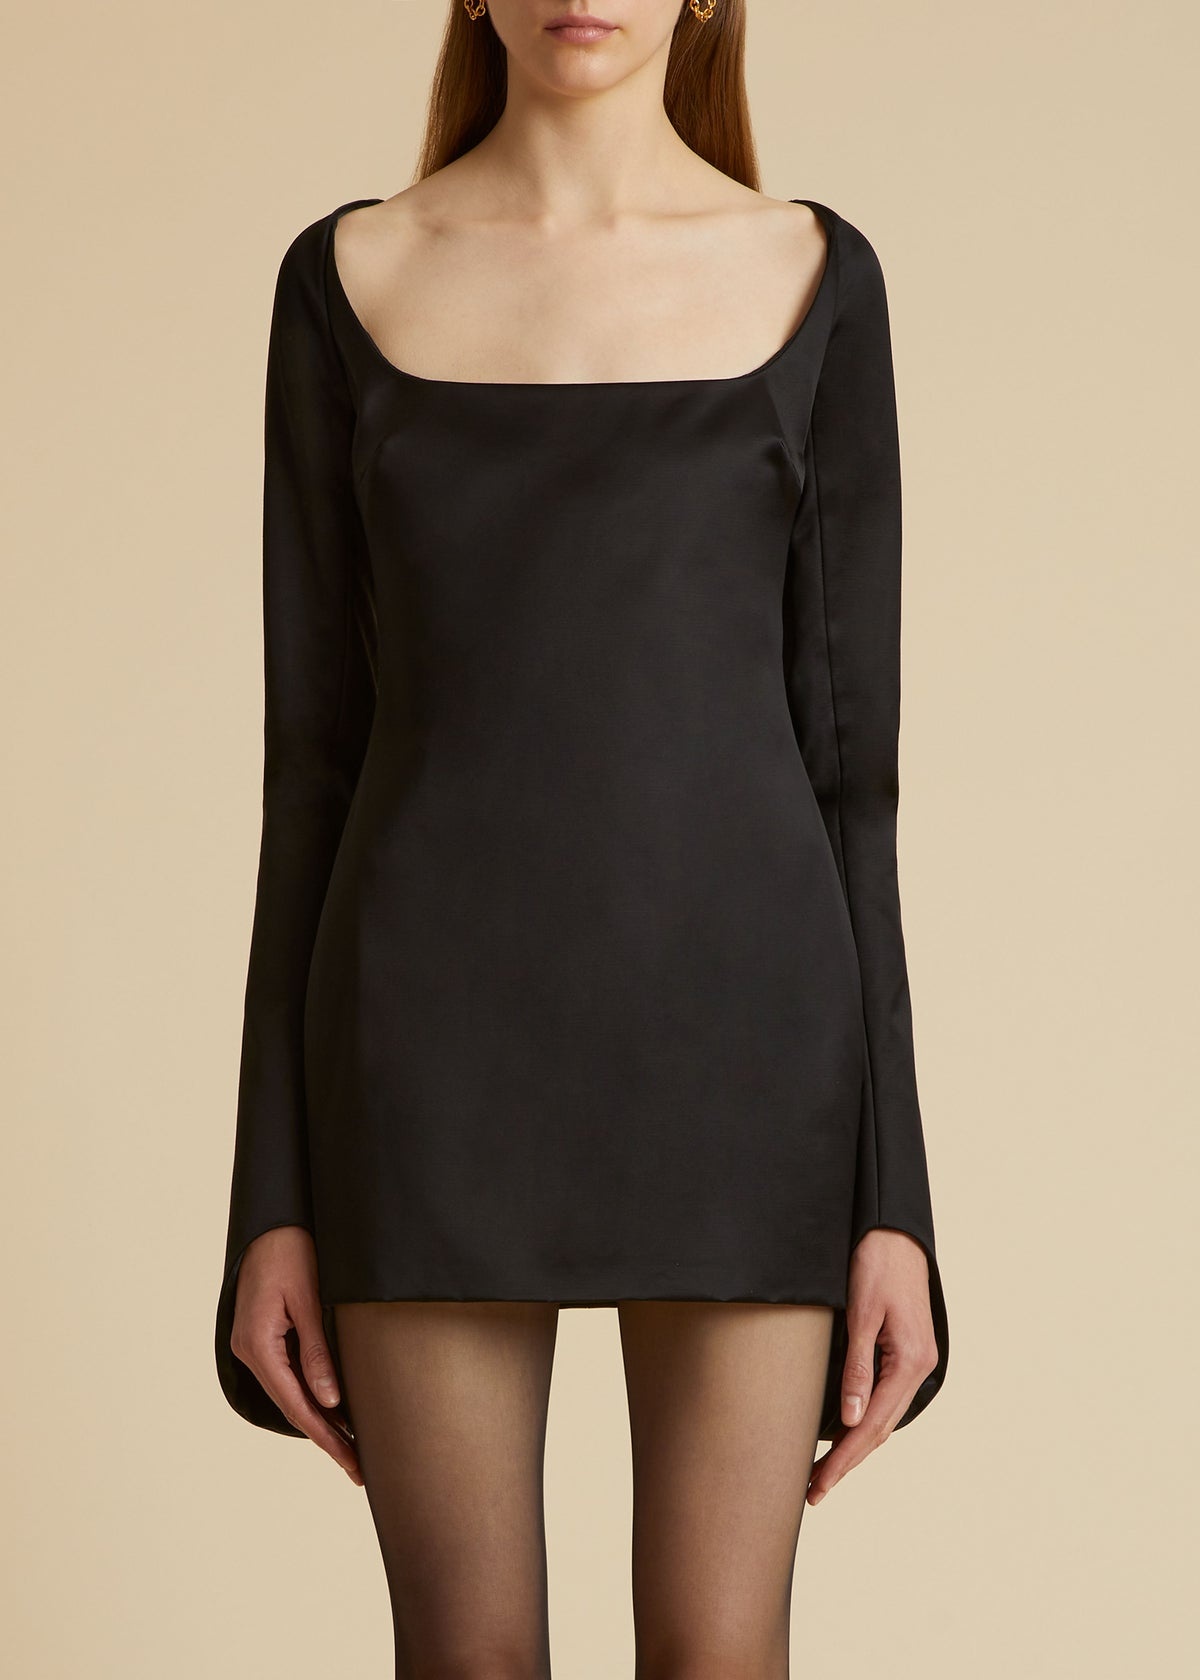 The Tate Dress in Black Satin - 2